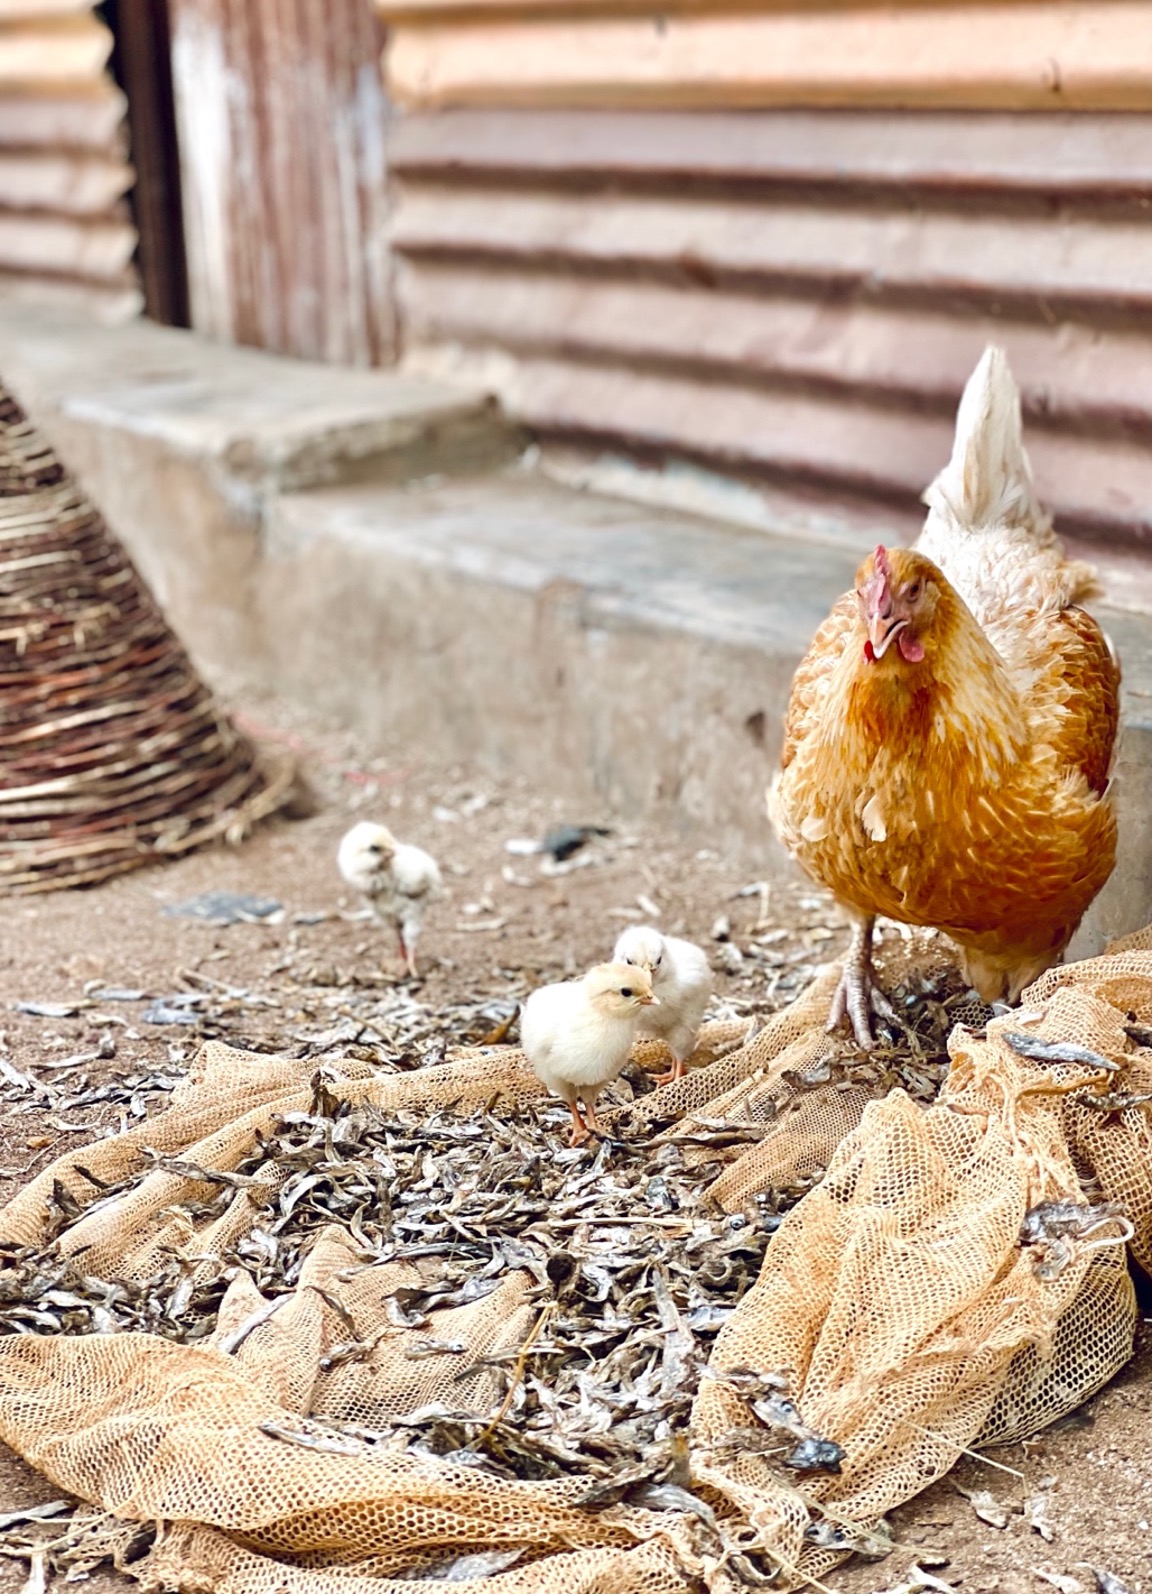 Hen chicken foraging on sun-dried dagaa (R. argentea) with her chicks in Homa Bay County, Kenya